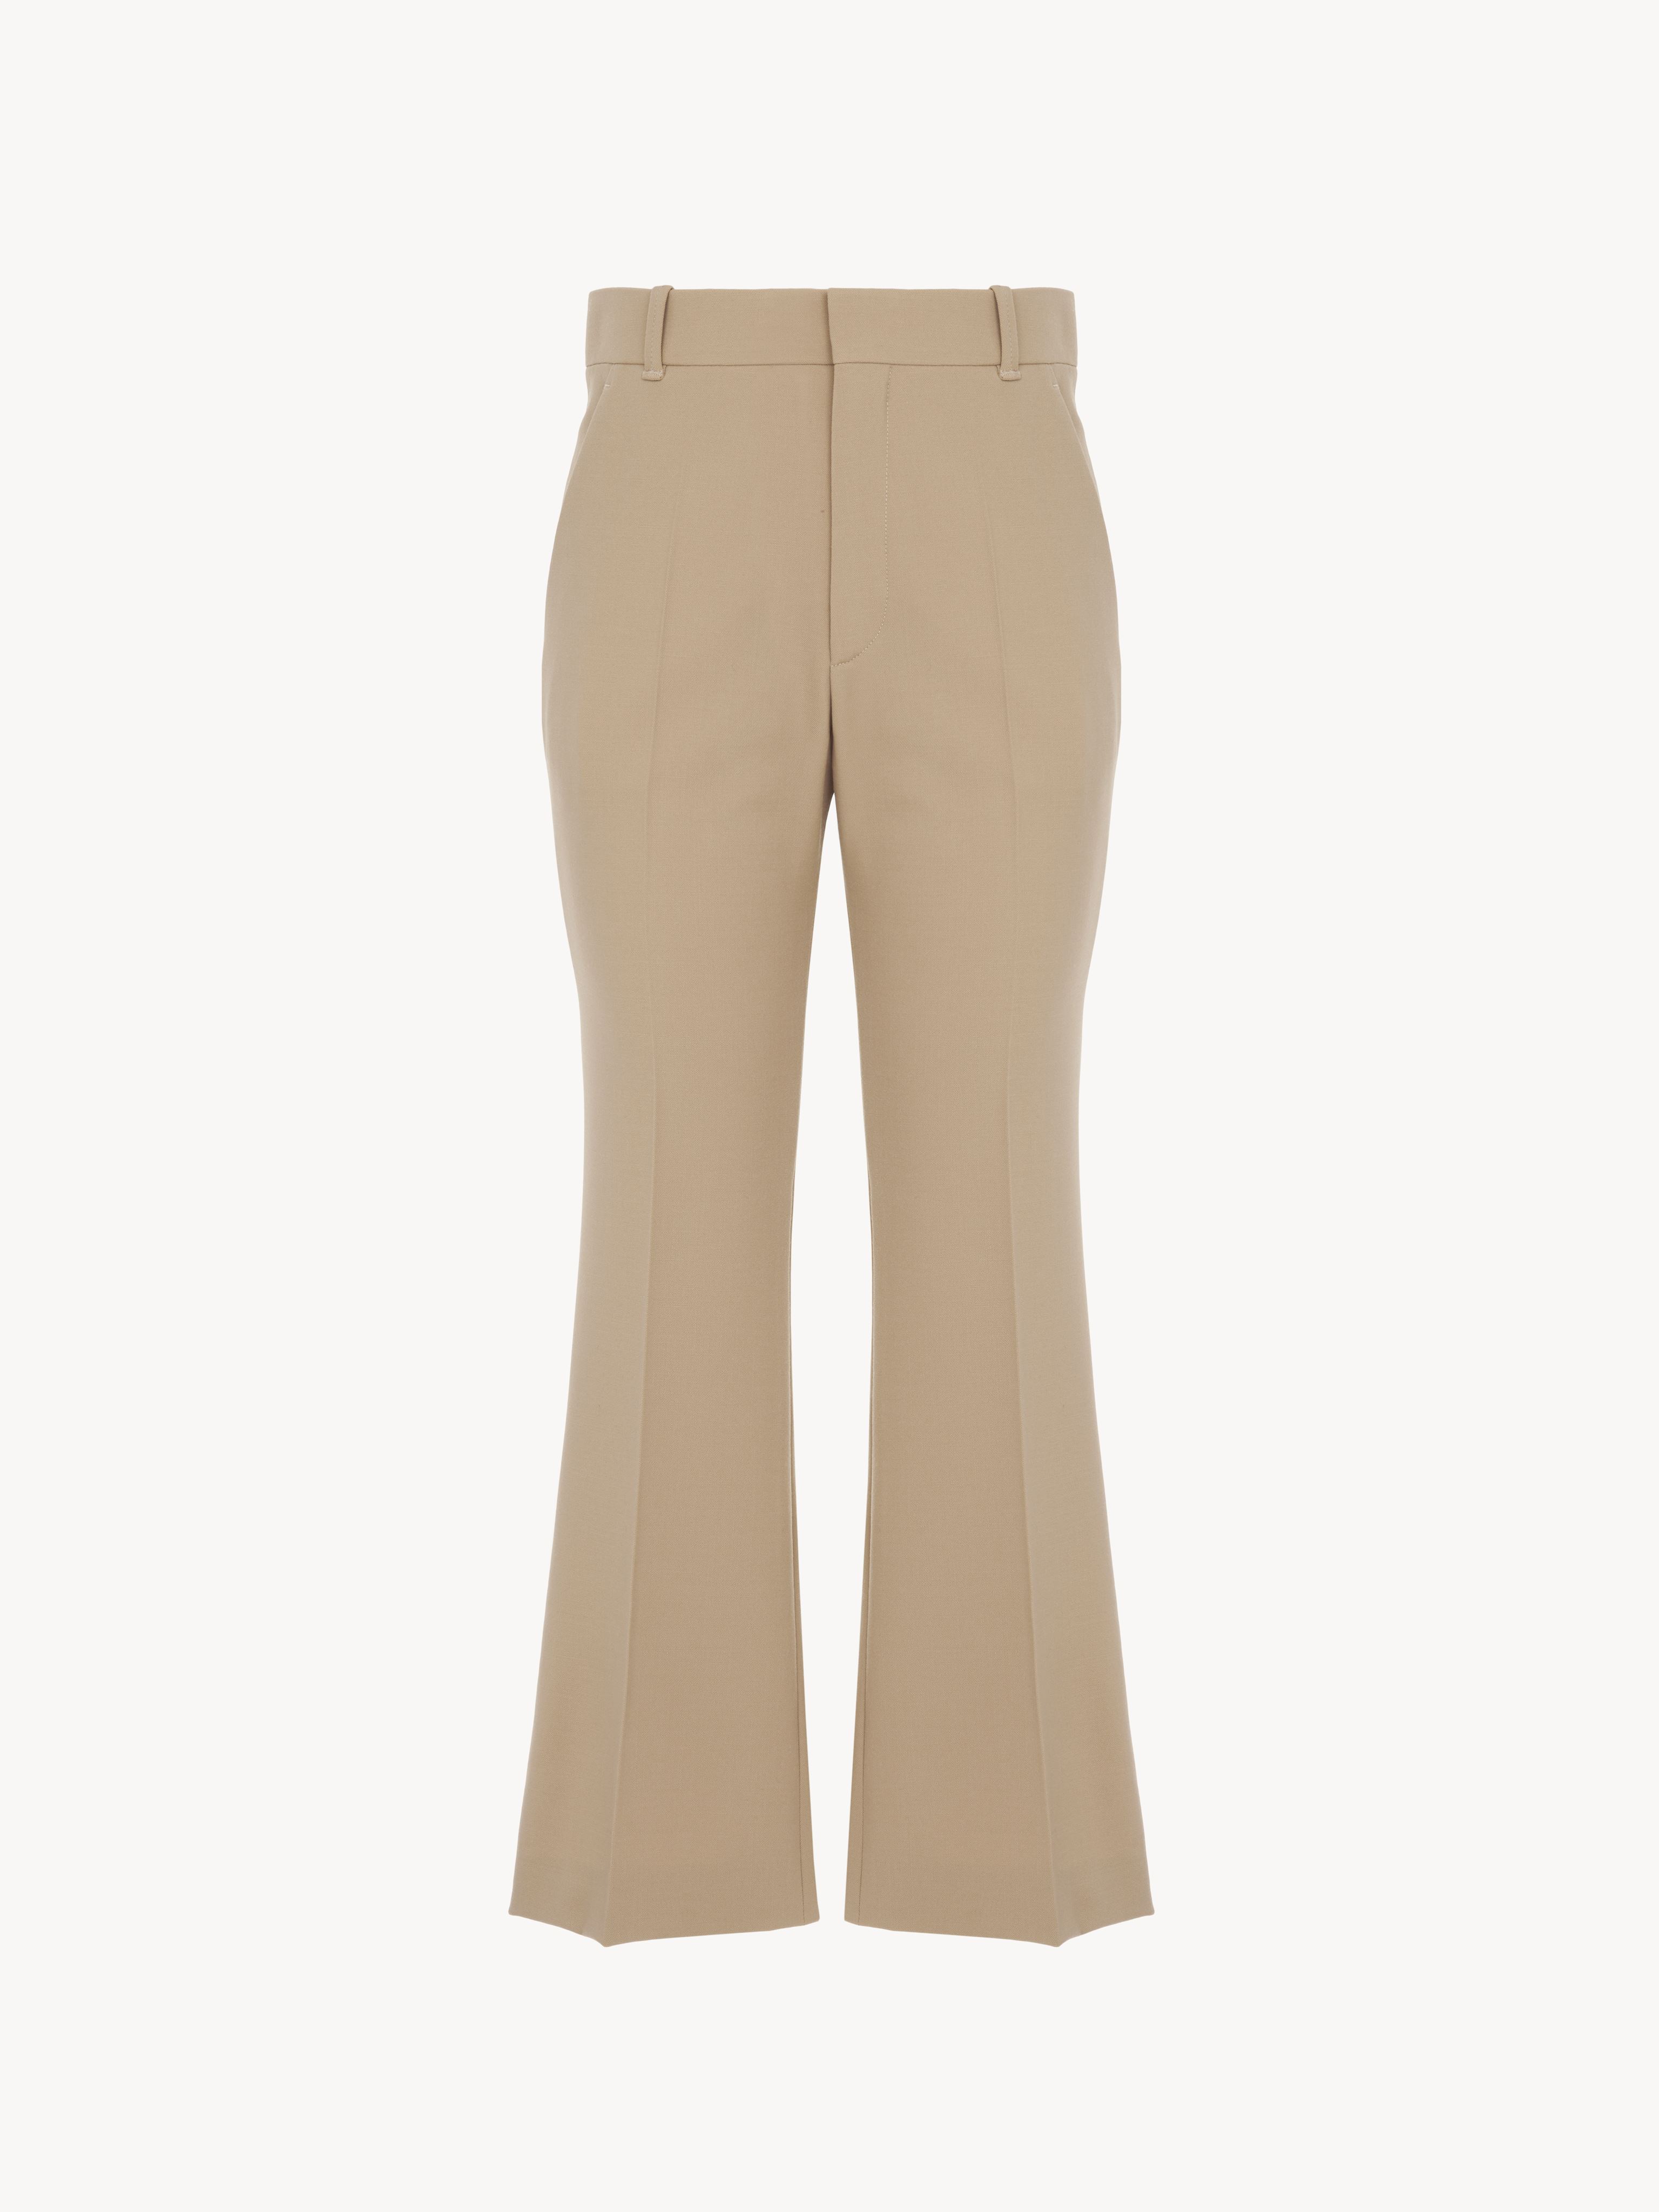 Chloé Cropped Bootcut Trousers Beige Size 6 95% Virgin Wool, 5% Elastane